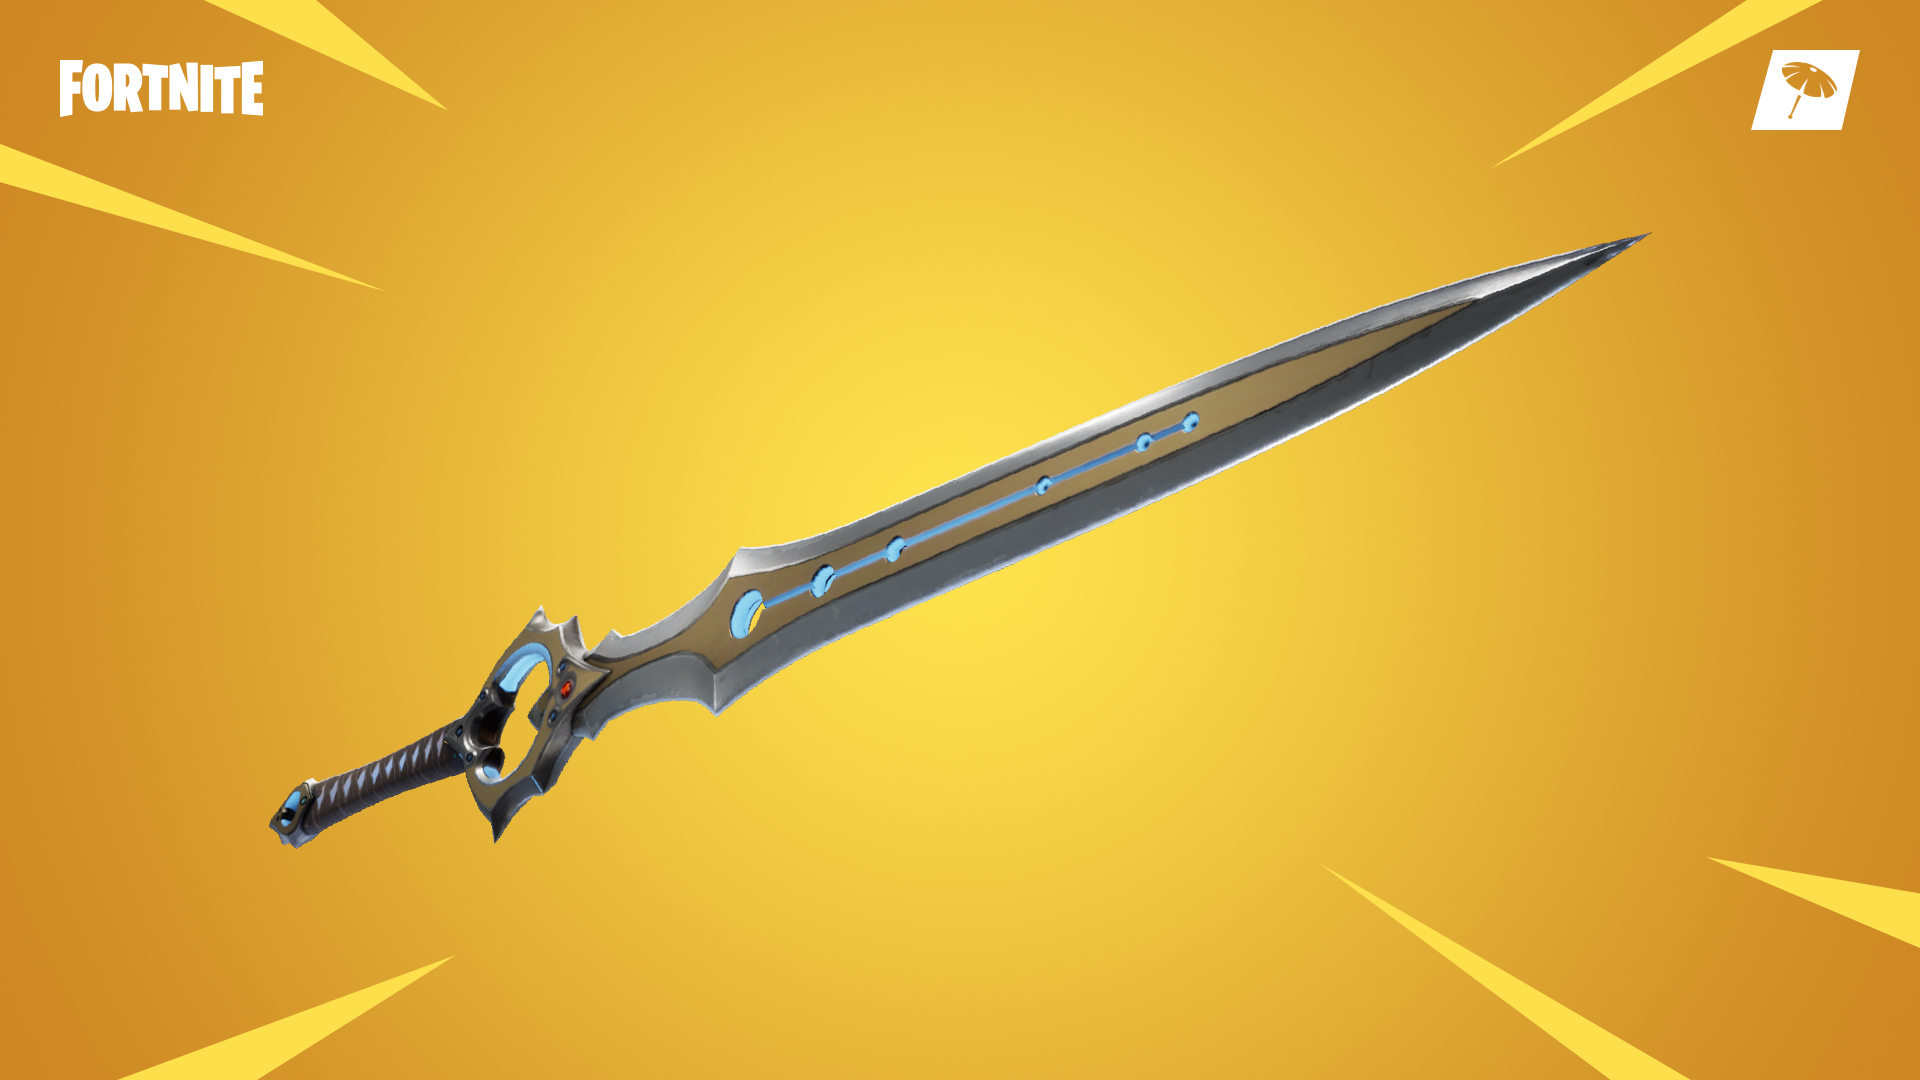 Fortnite Infinity Sword new weapon